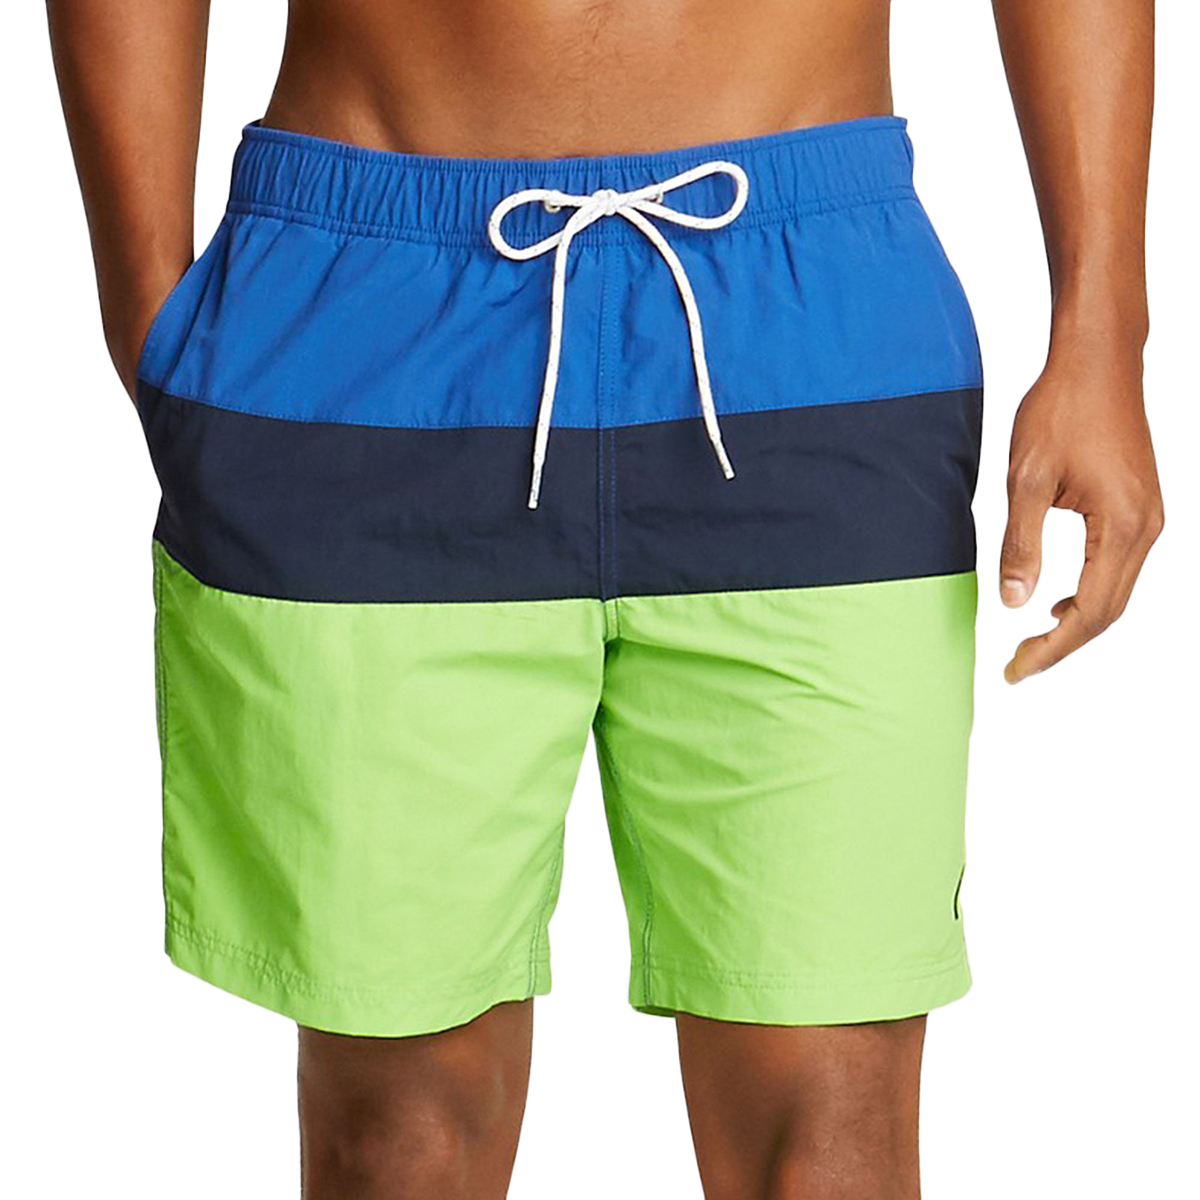 Nautica Men's Tri-Block Swim Shorts - Green, M